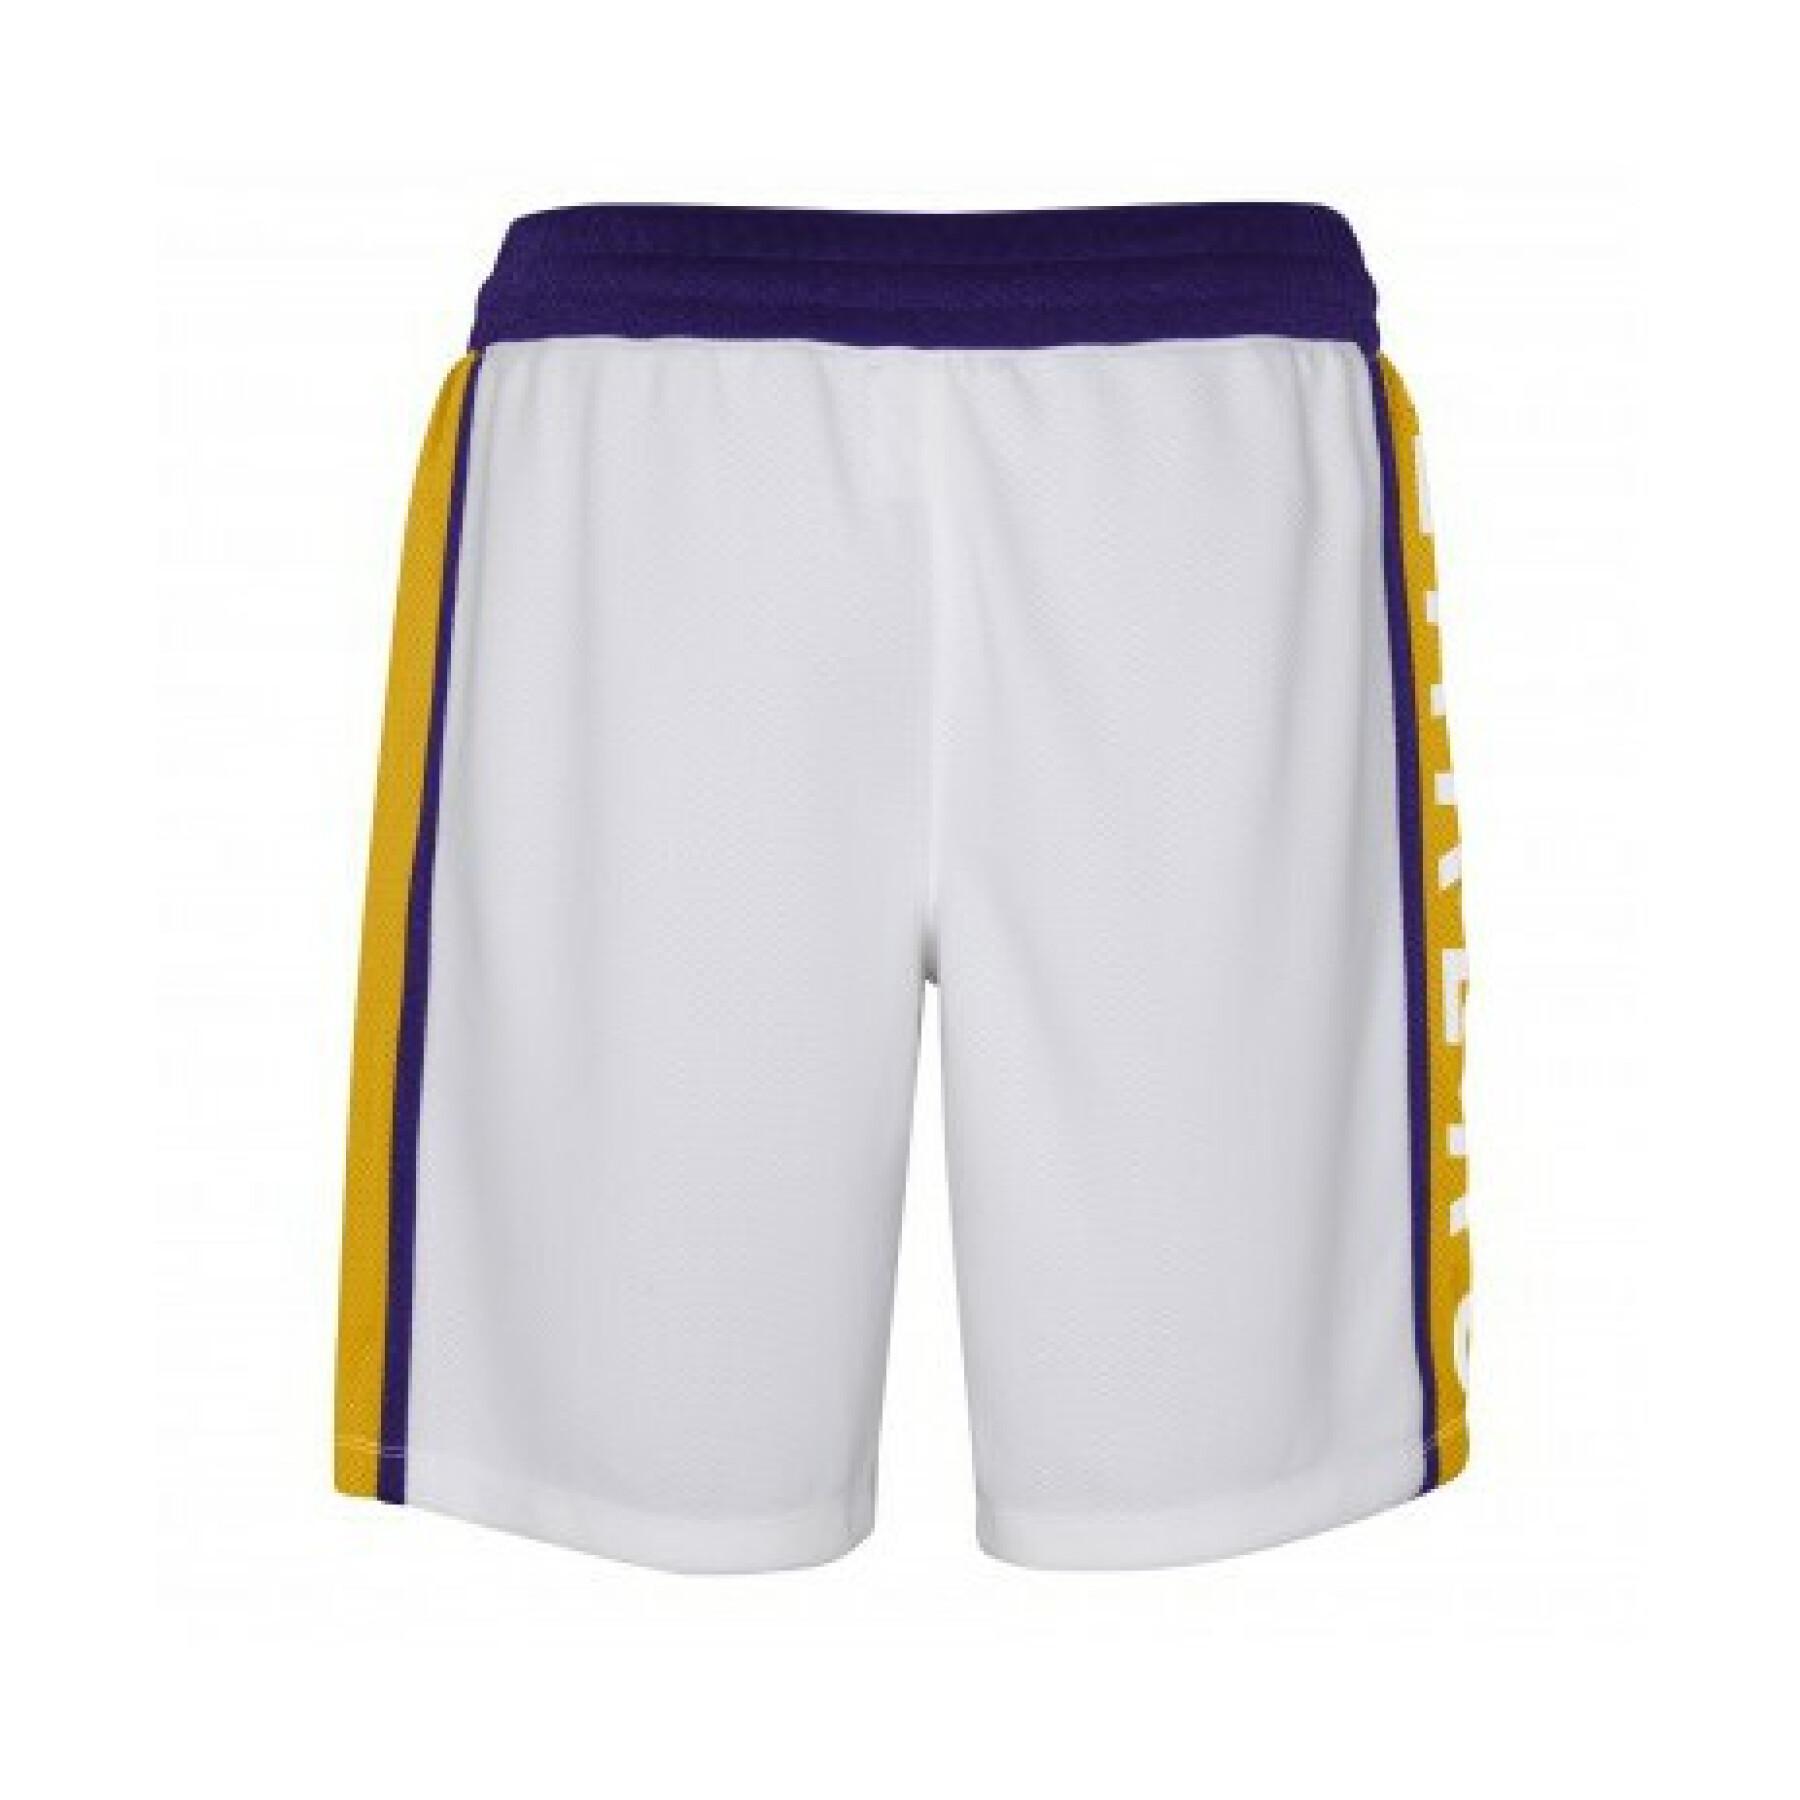 Basketballhosen für Kinder Los Angeles Lakers Lebron James